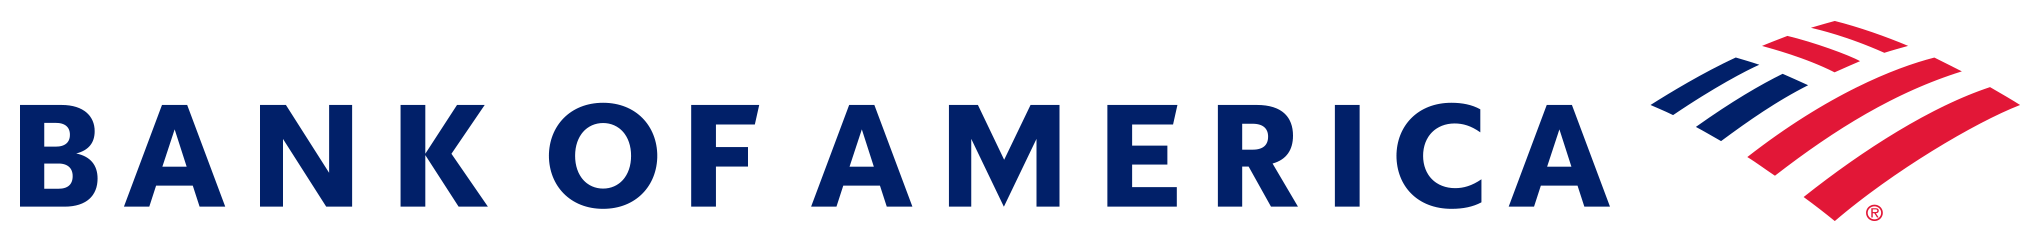 bank_of_america_logo_a